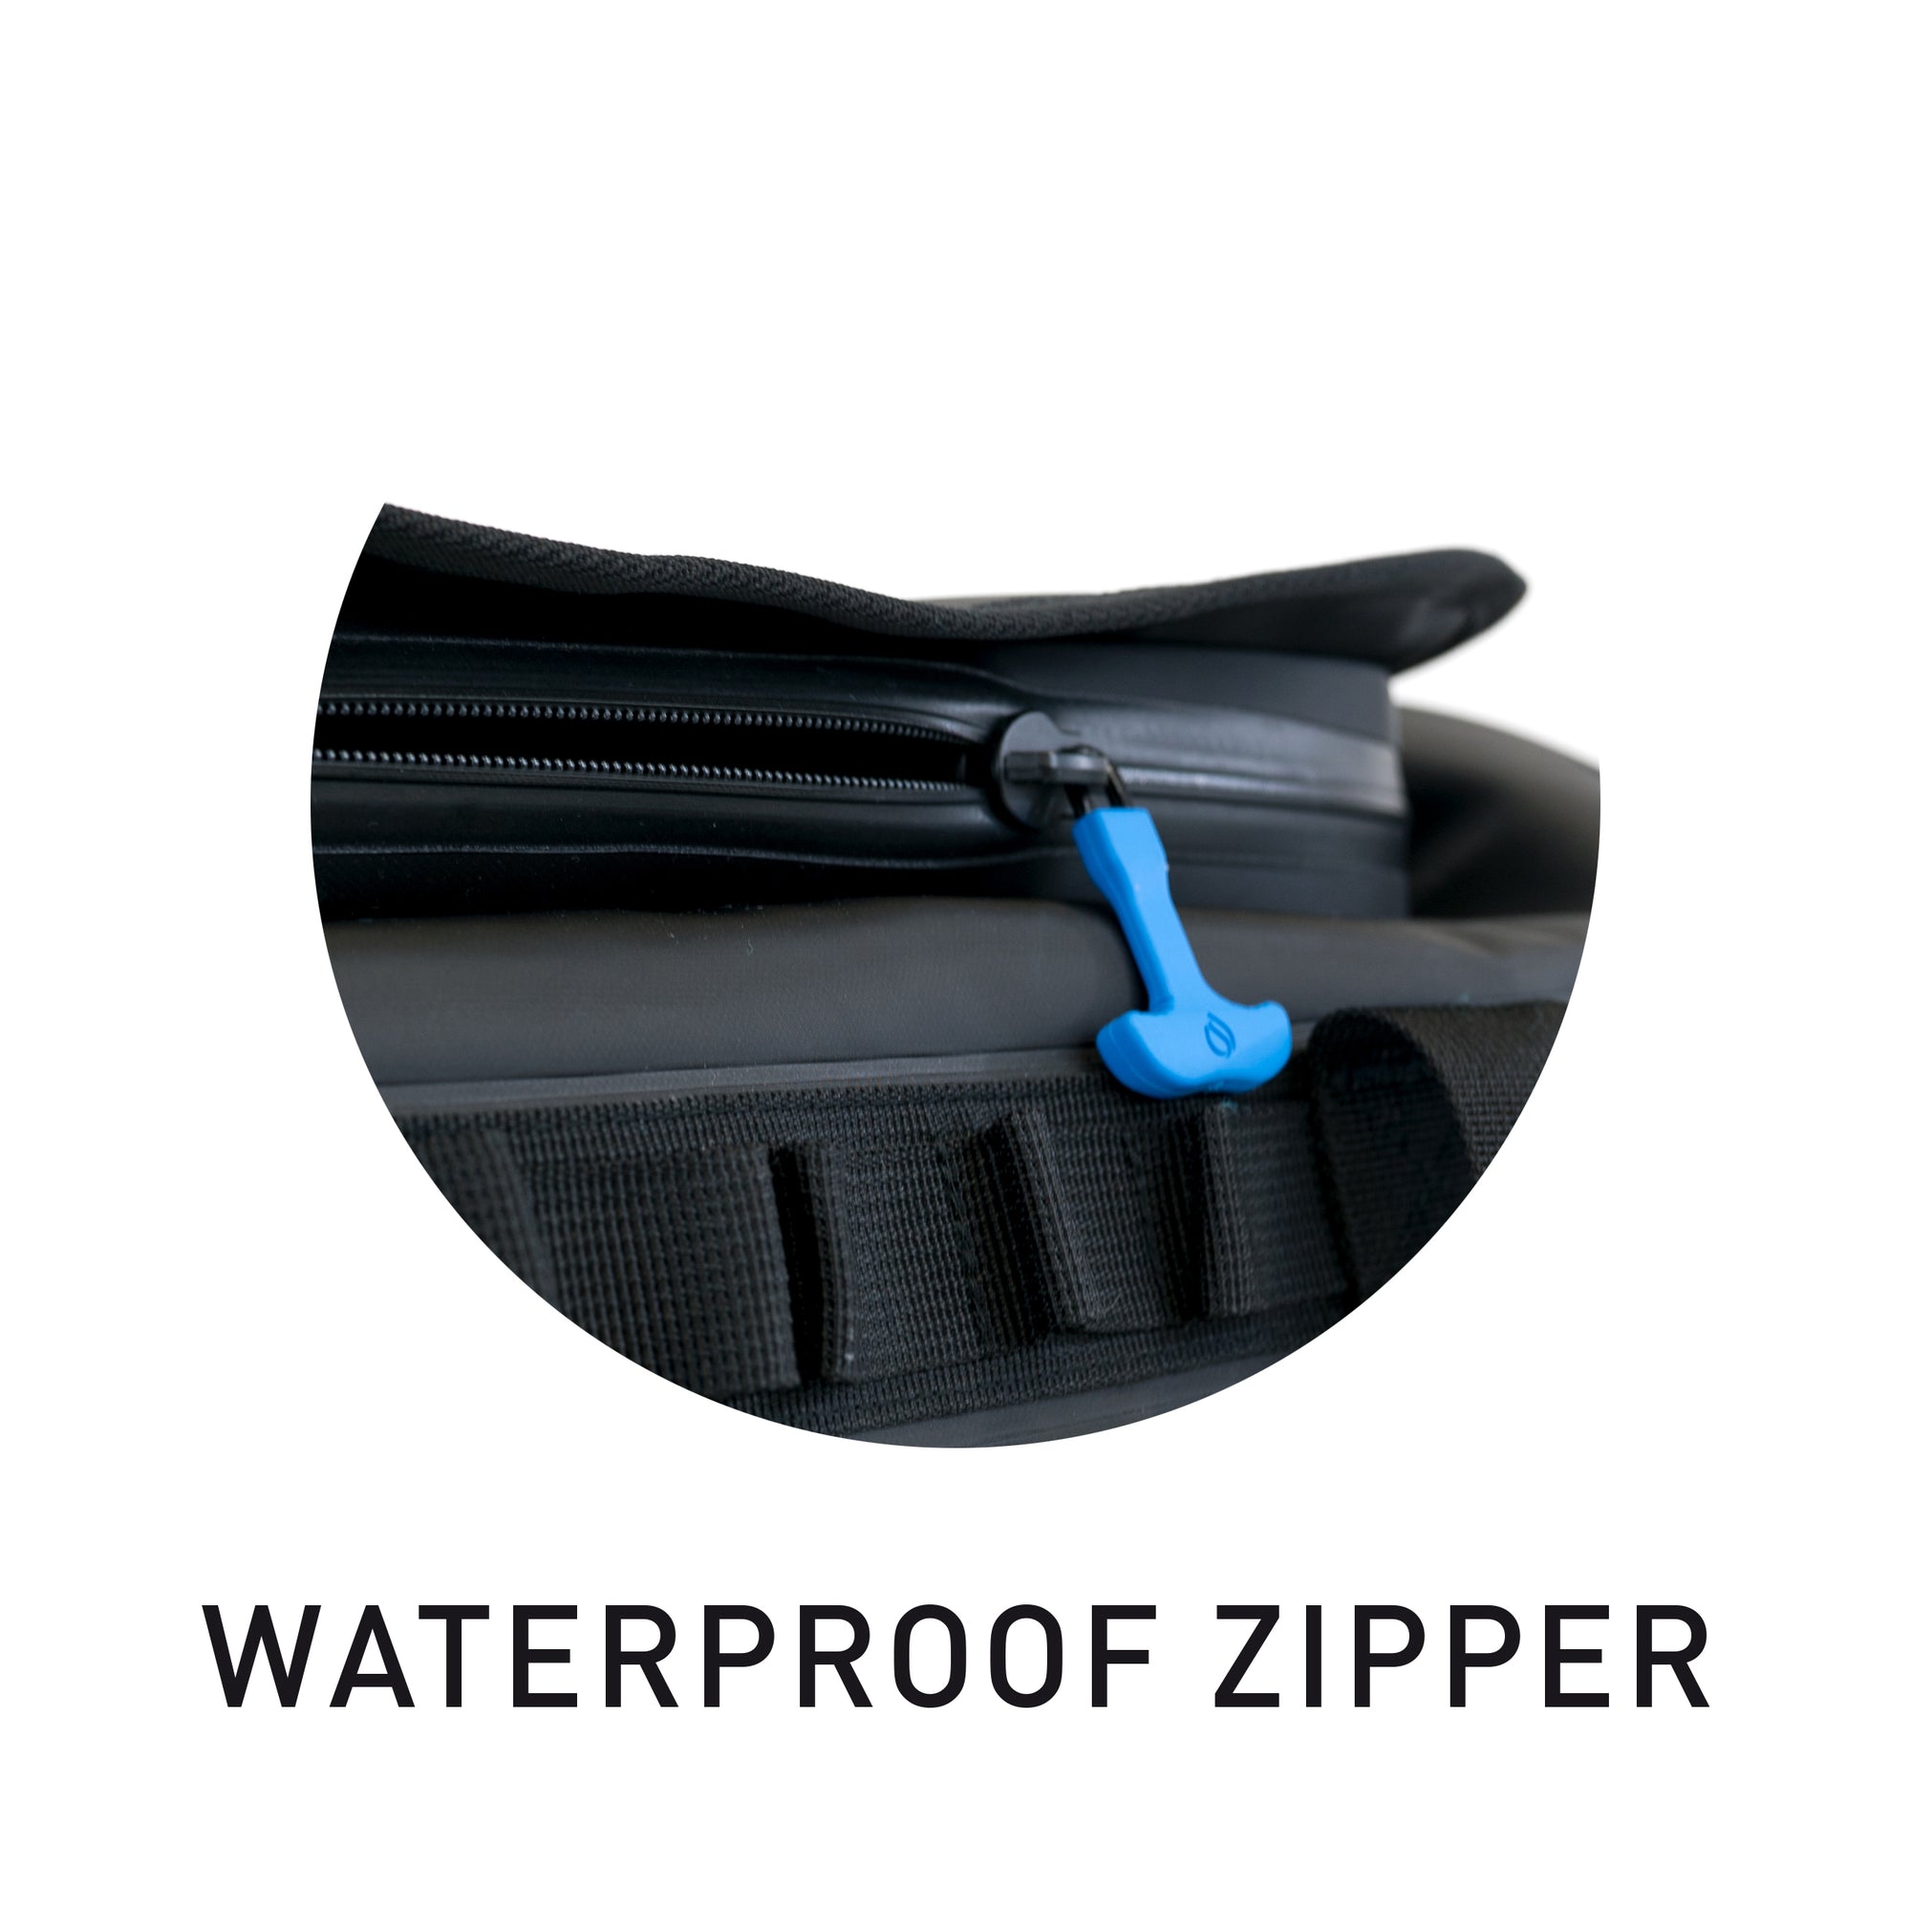 Surflogic Prodry Zip Waterproof Duffel Bag 50L